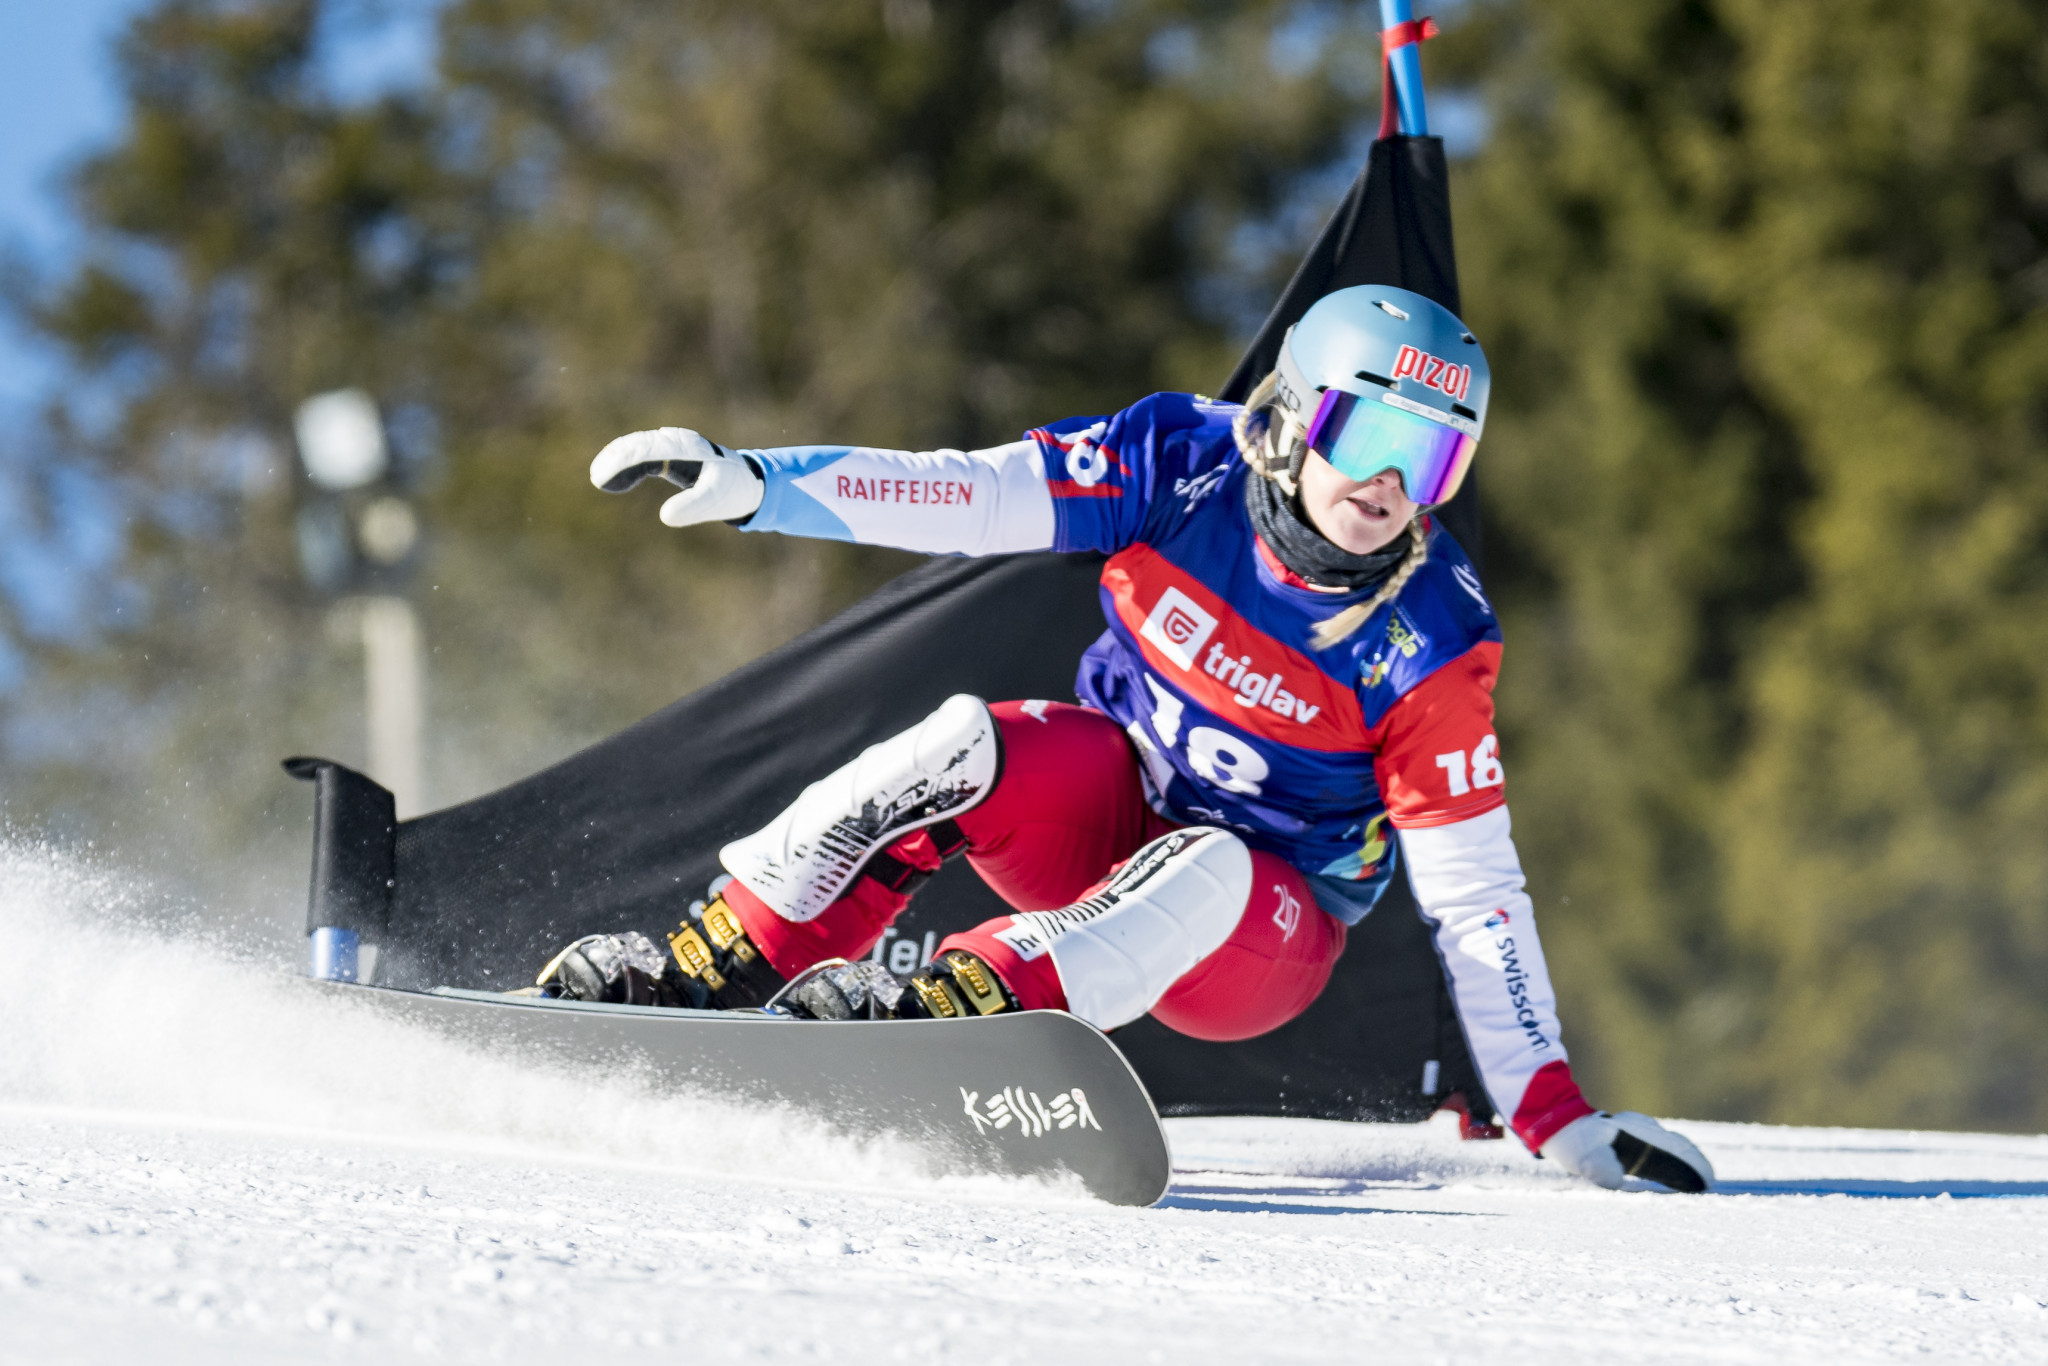 Julie Zogg will headline Switzerland's team for the new Alpine snowboard season ©Getty Images